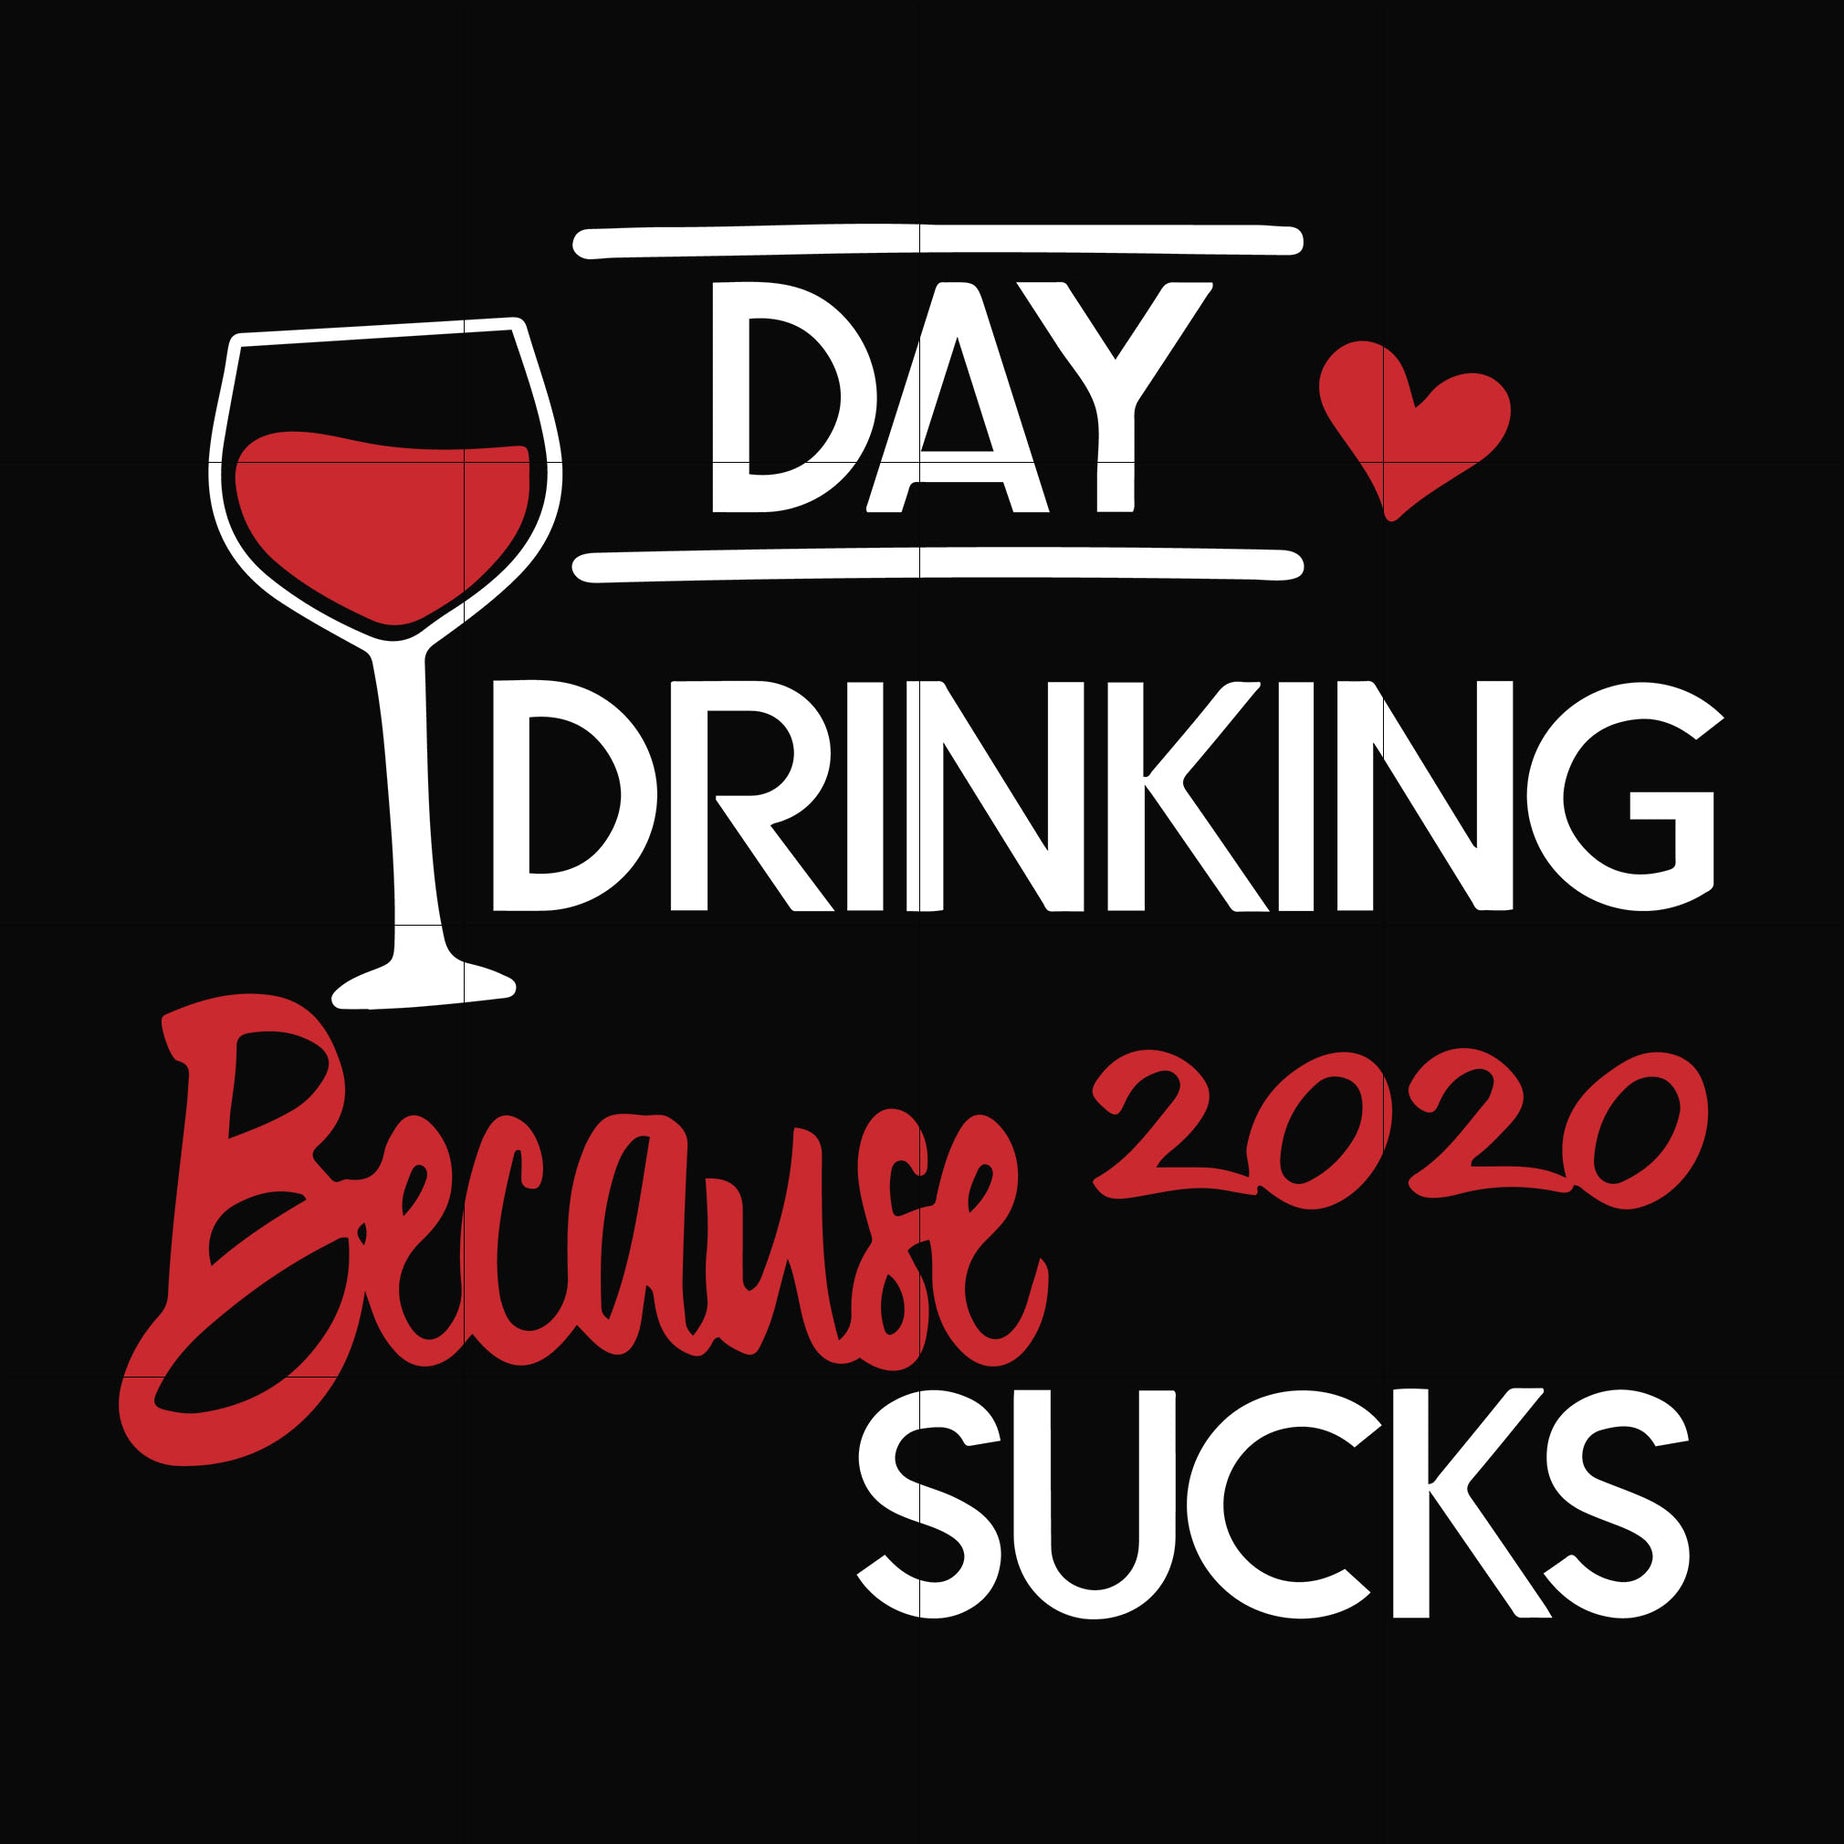 Day drinking 2020 because sucks svg, png, dxf, eps digital file TD2907201